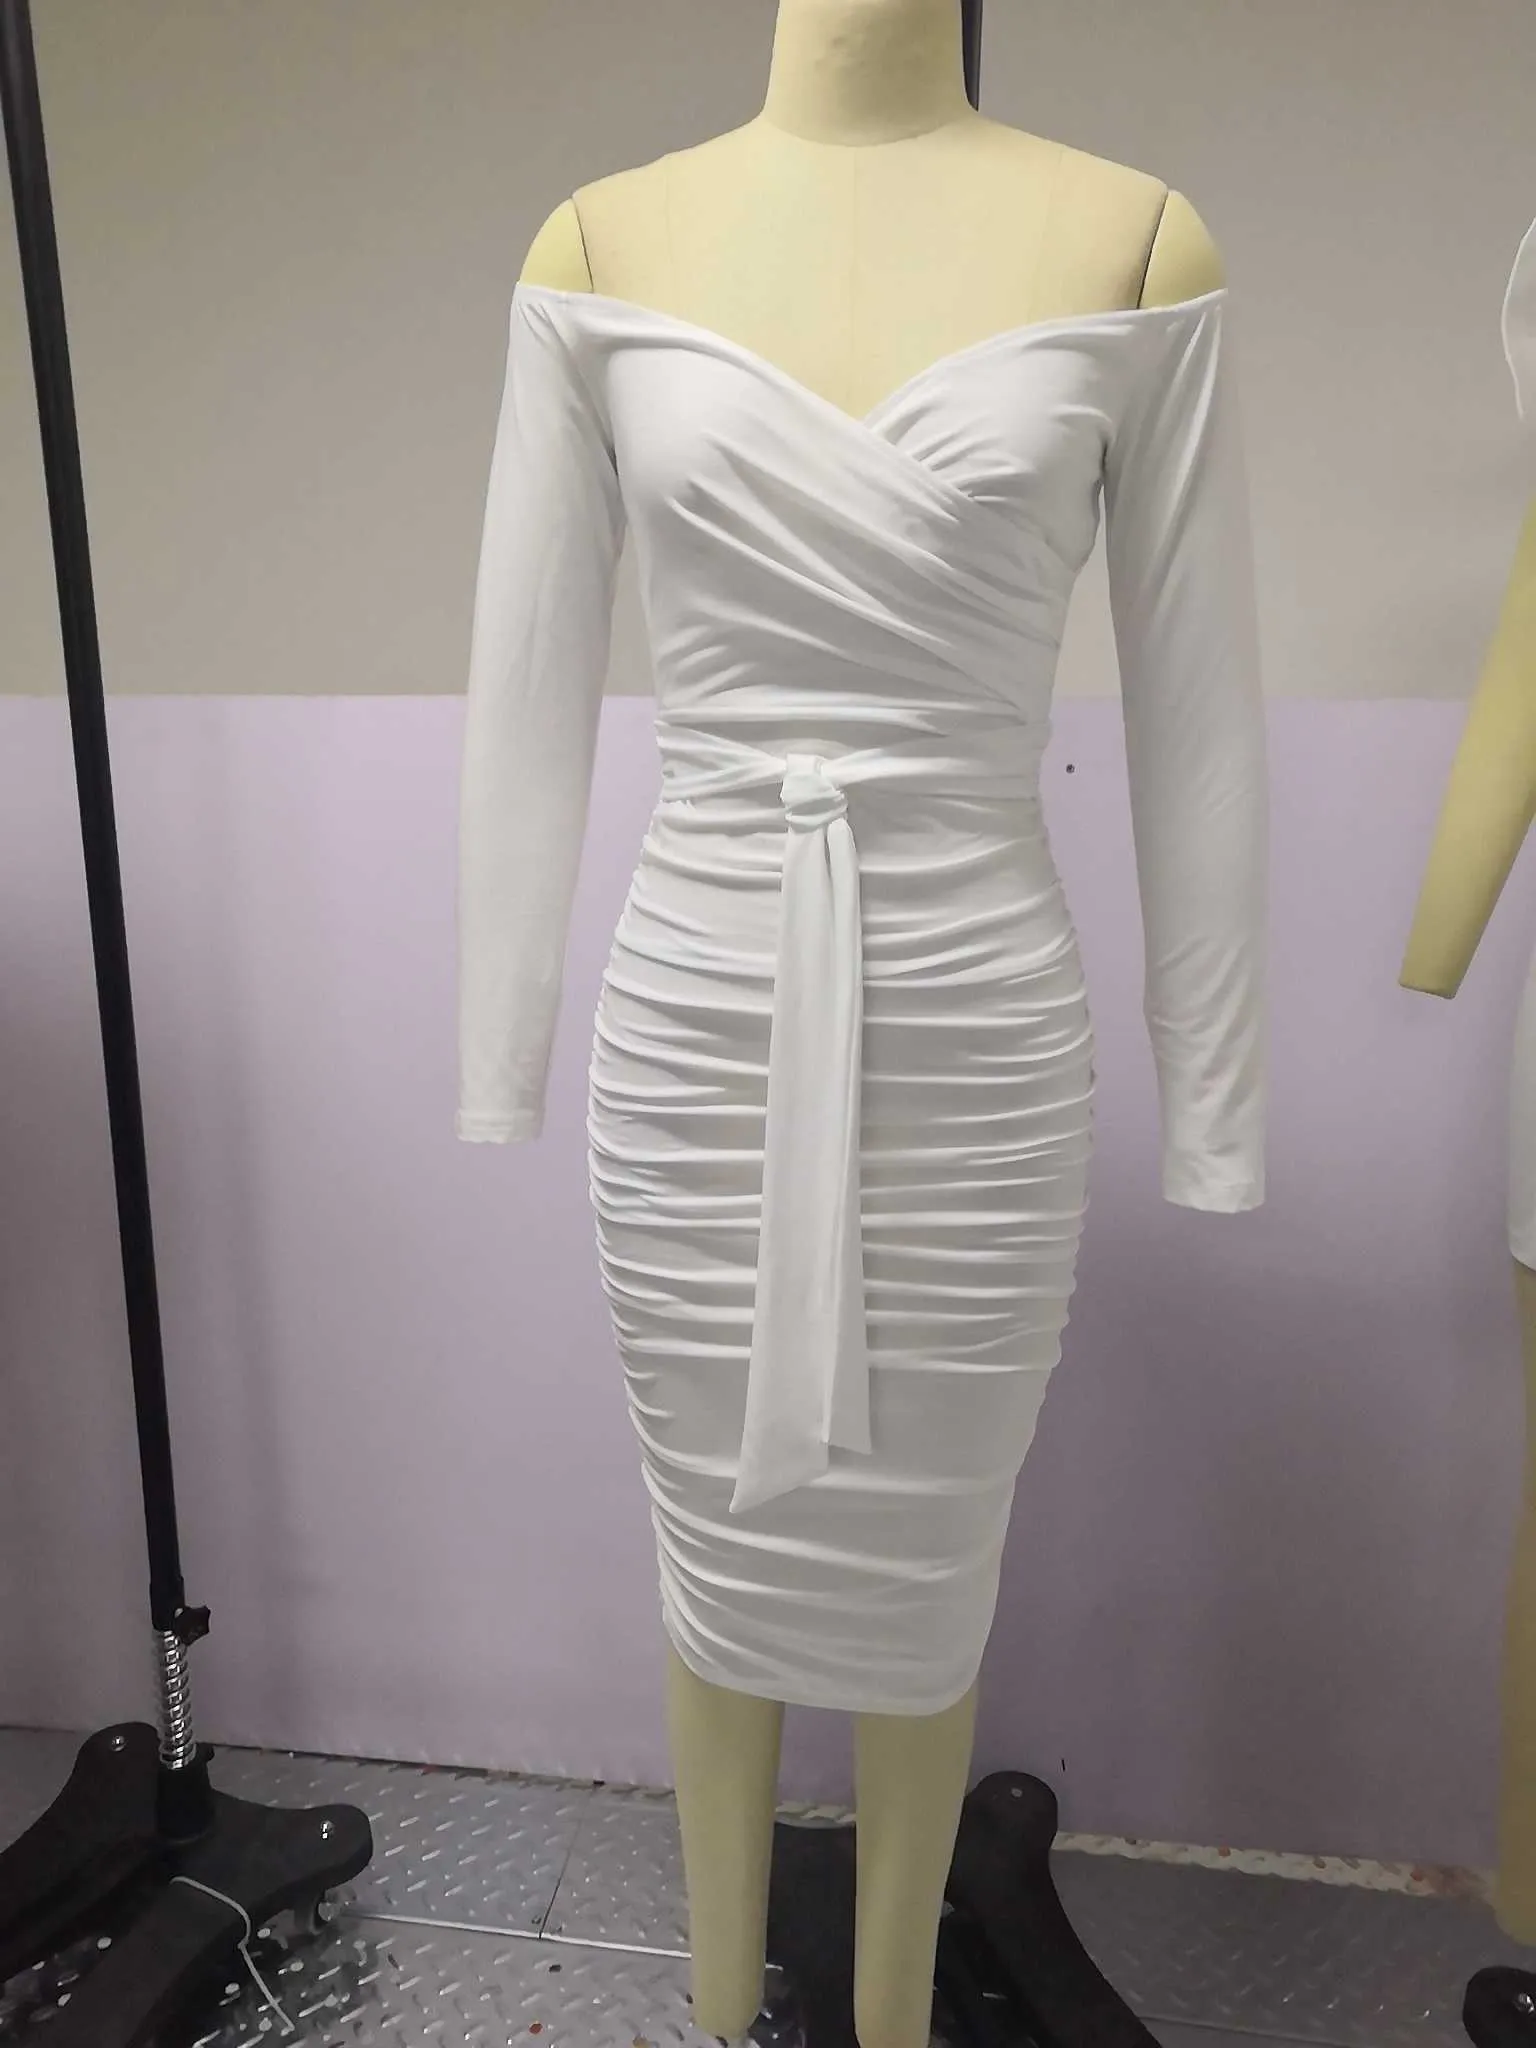 Polkadot Print Ruffles Scarf Off Shoulder Ruched Belted Bodycon Dress 2021 Women Elegant Dress Y1006